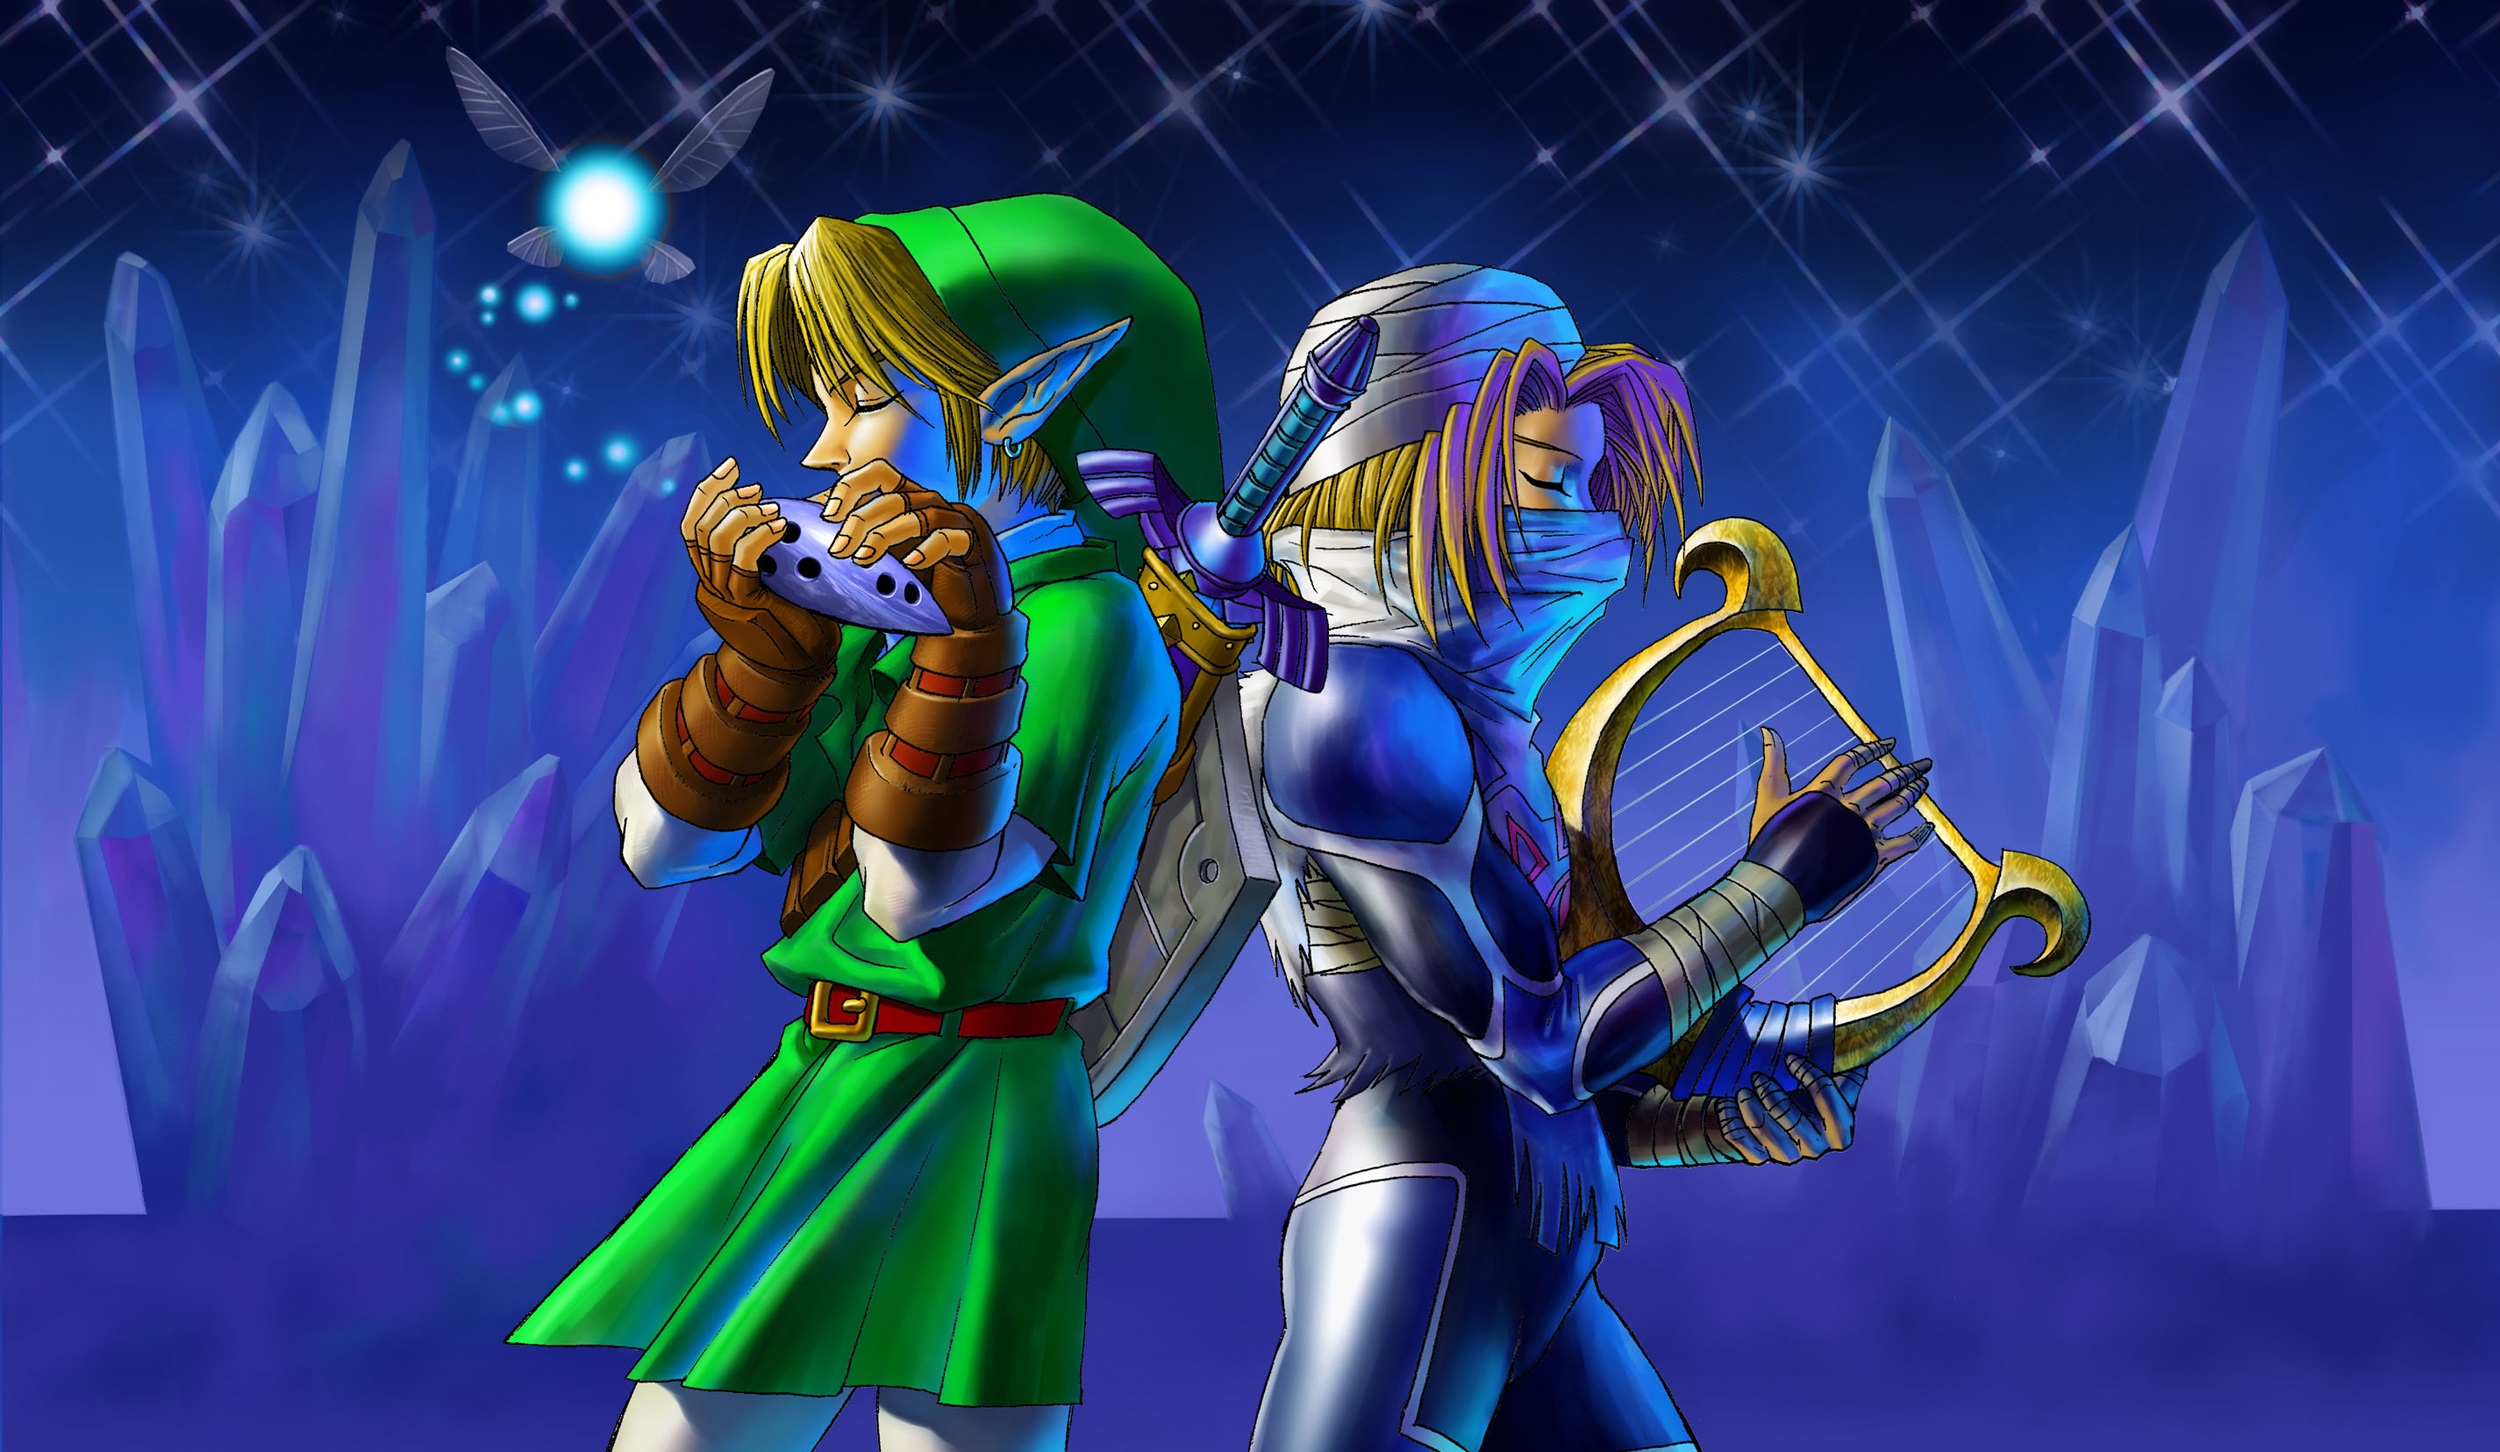 Ocarina music in The Legend of Zelda: Ocarina of Time •